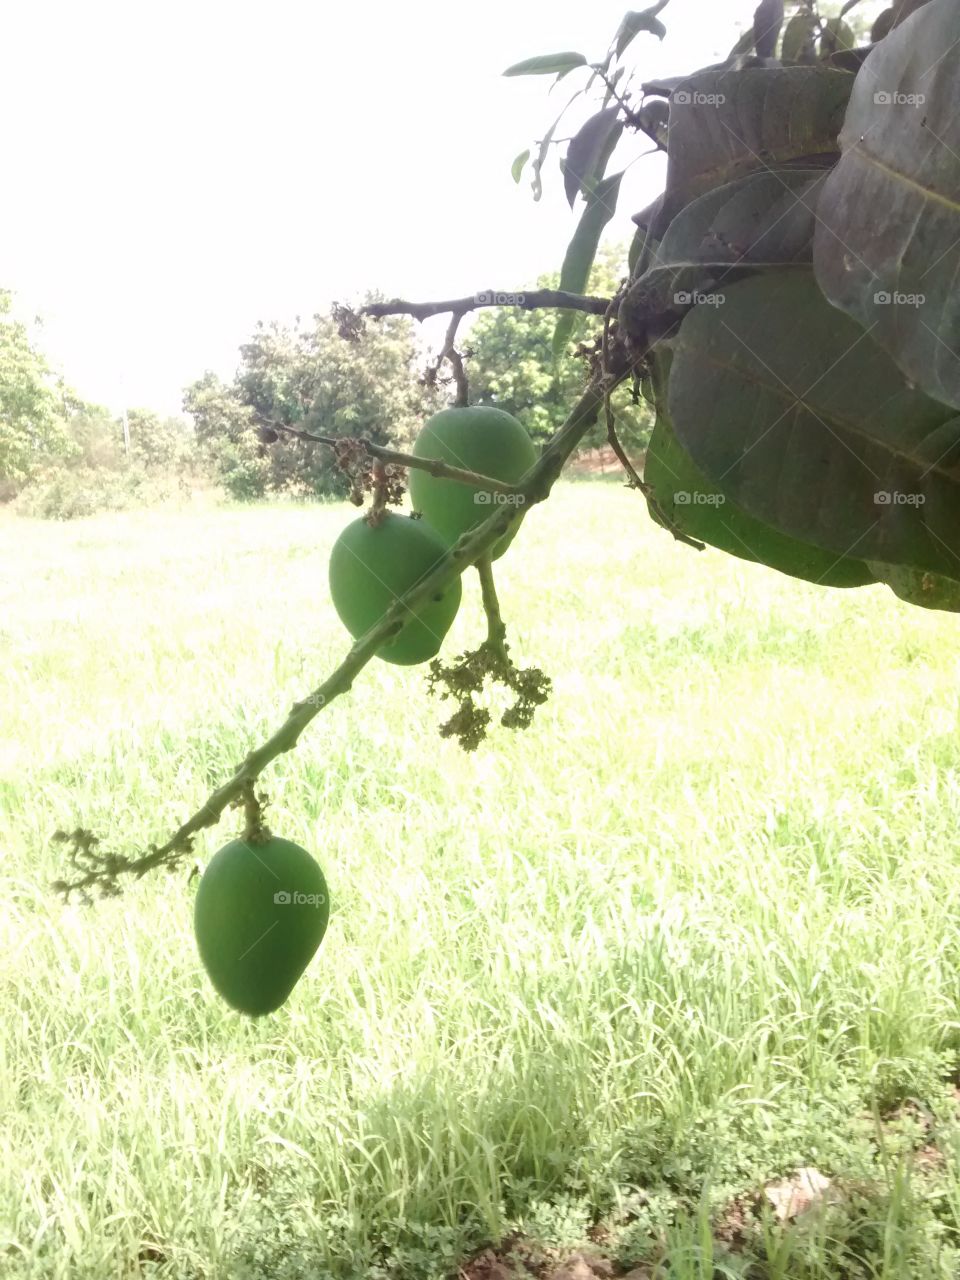 green mango on tree